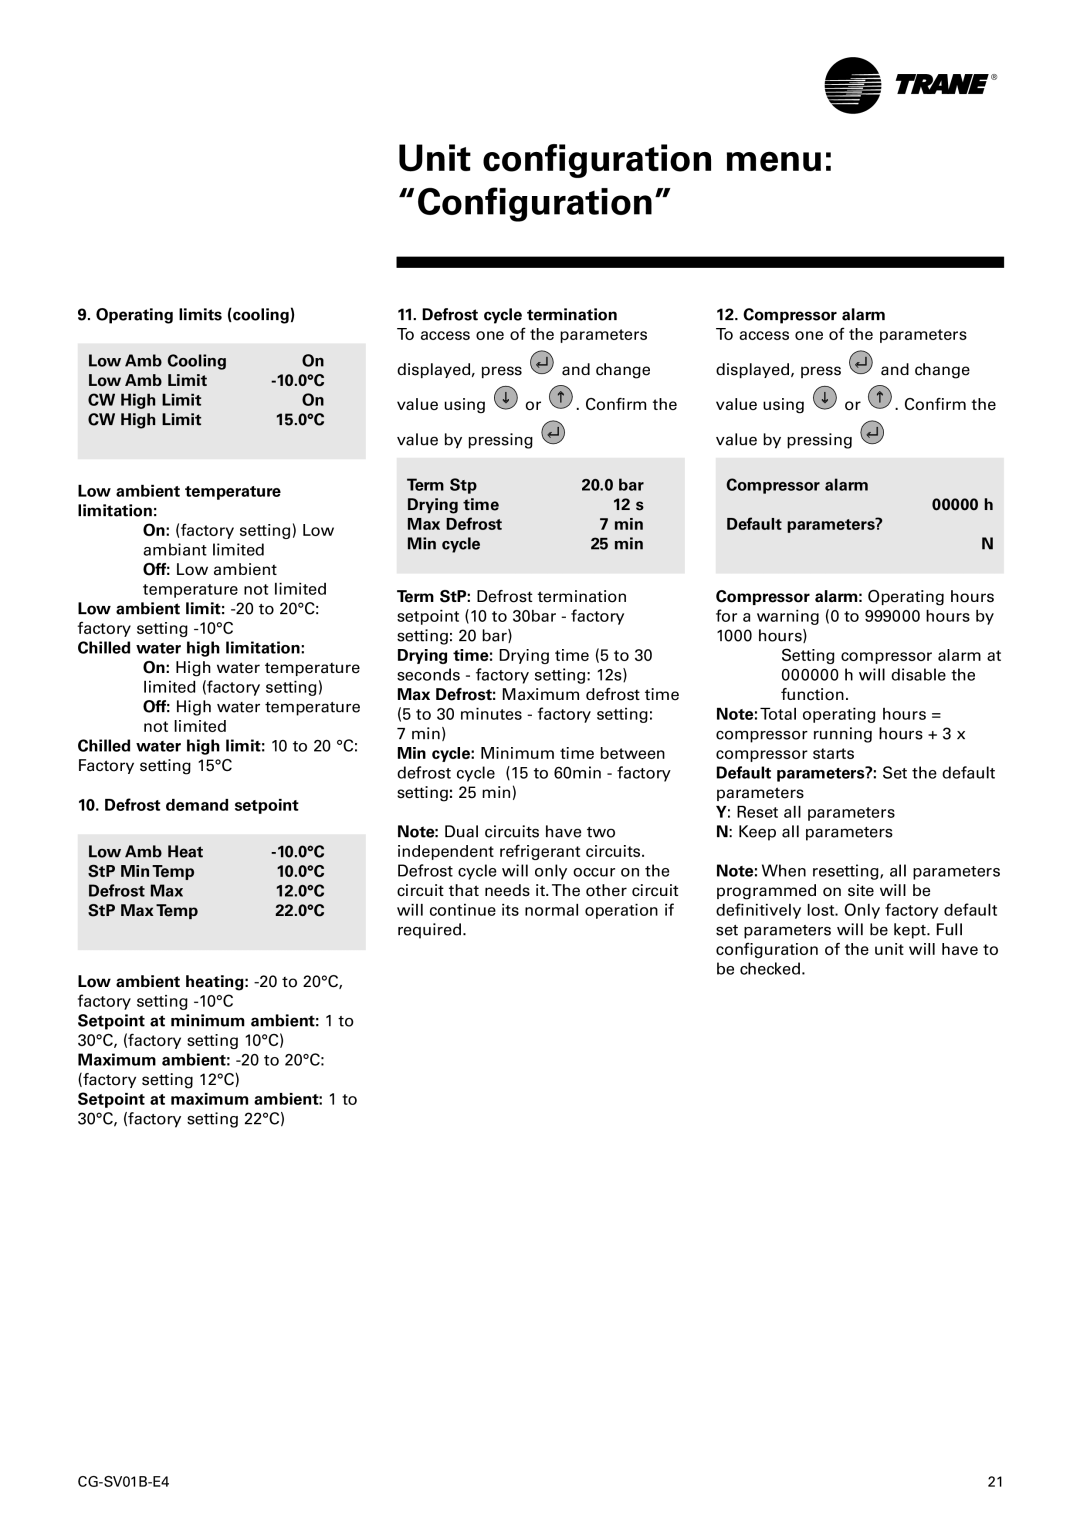 American Standard TRACER CH532 manual Unit configuration menu “Configuration” 